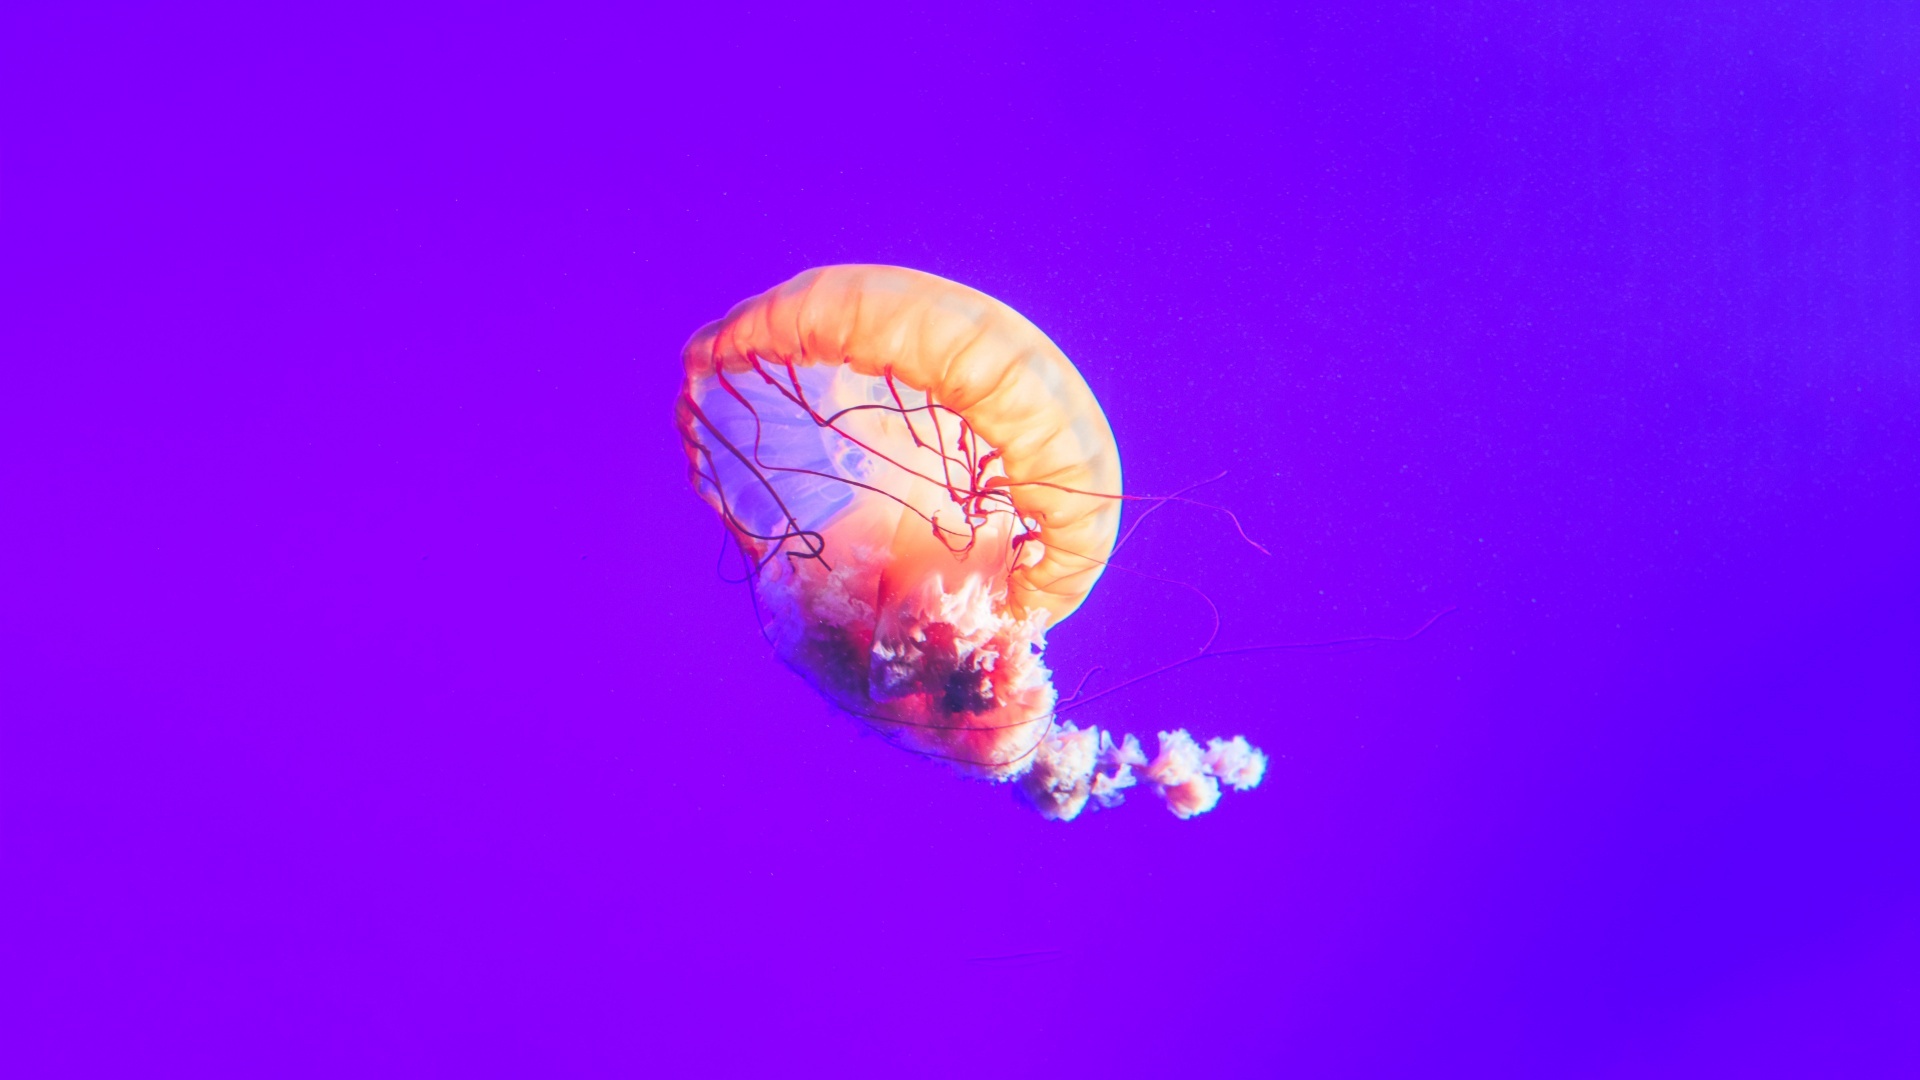 Animals in jellyfish, Nature's marvels, Underwater kingdom, Captivating creatures, 1920x1080 Full HD Desktop